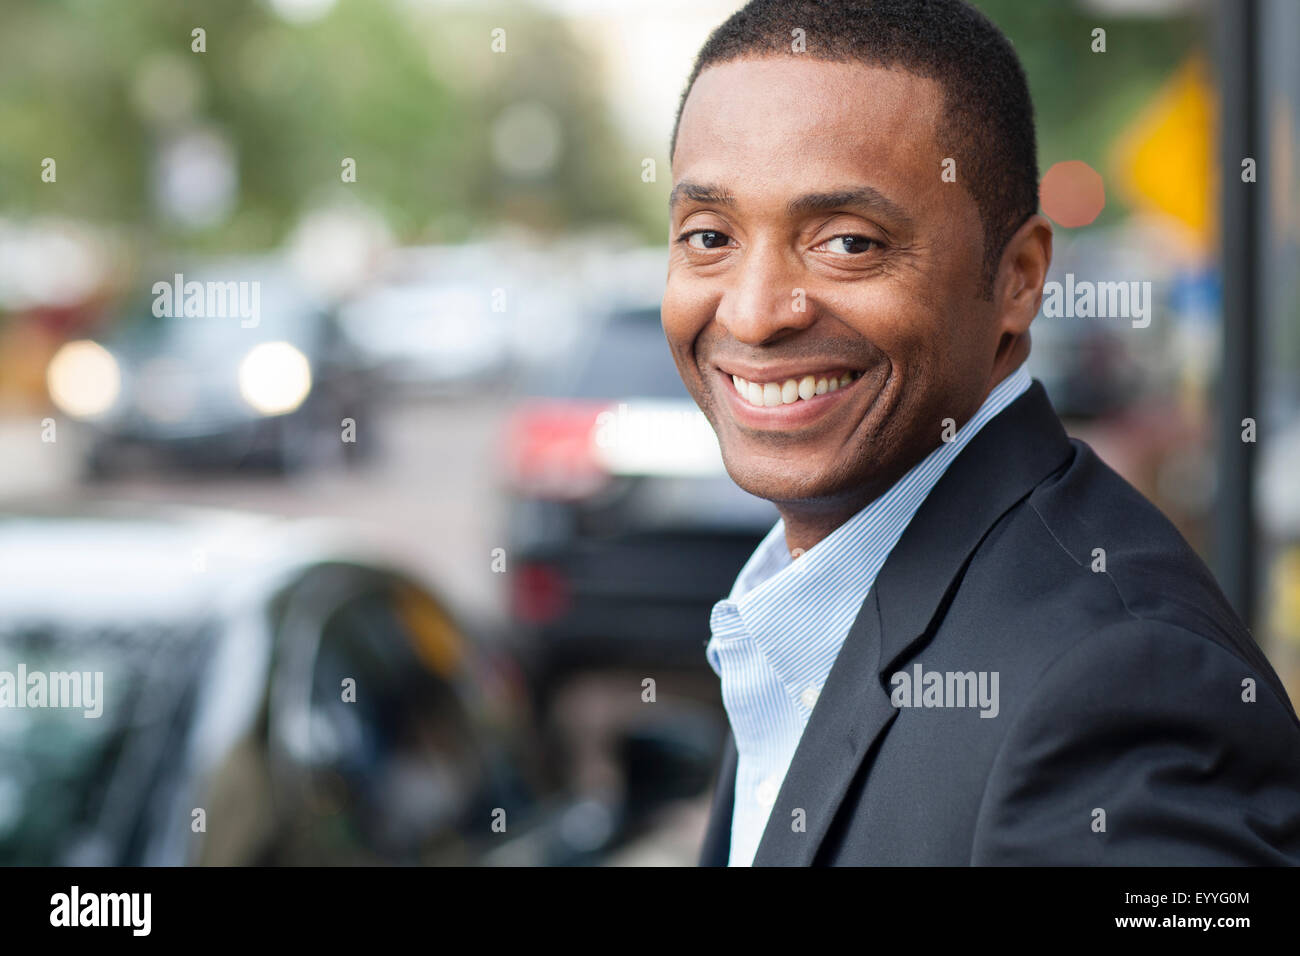 Black businessman smiling in city Stock Photo